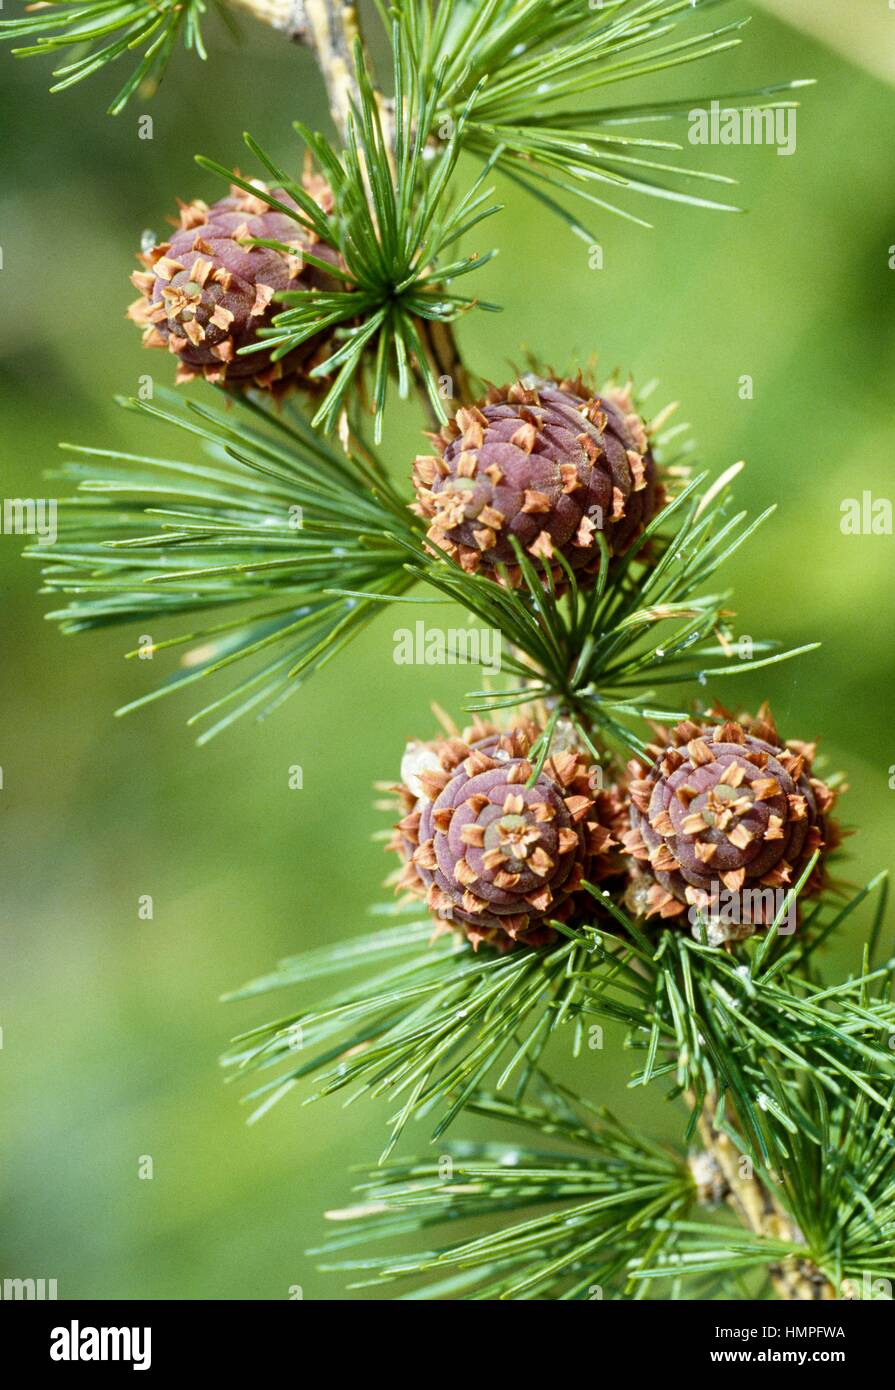 Larch branch with cones (Larix sp), Pinaceae. Stock Photo